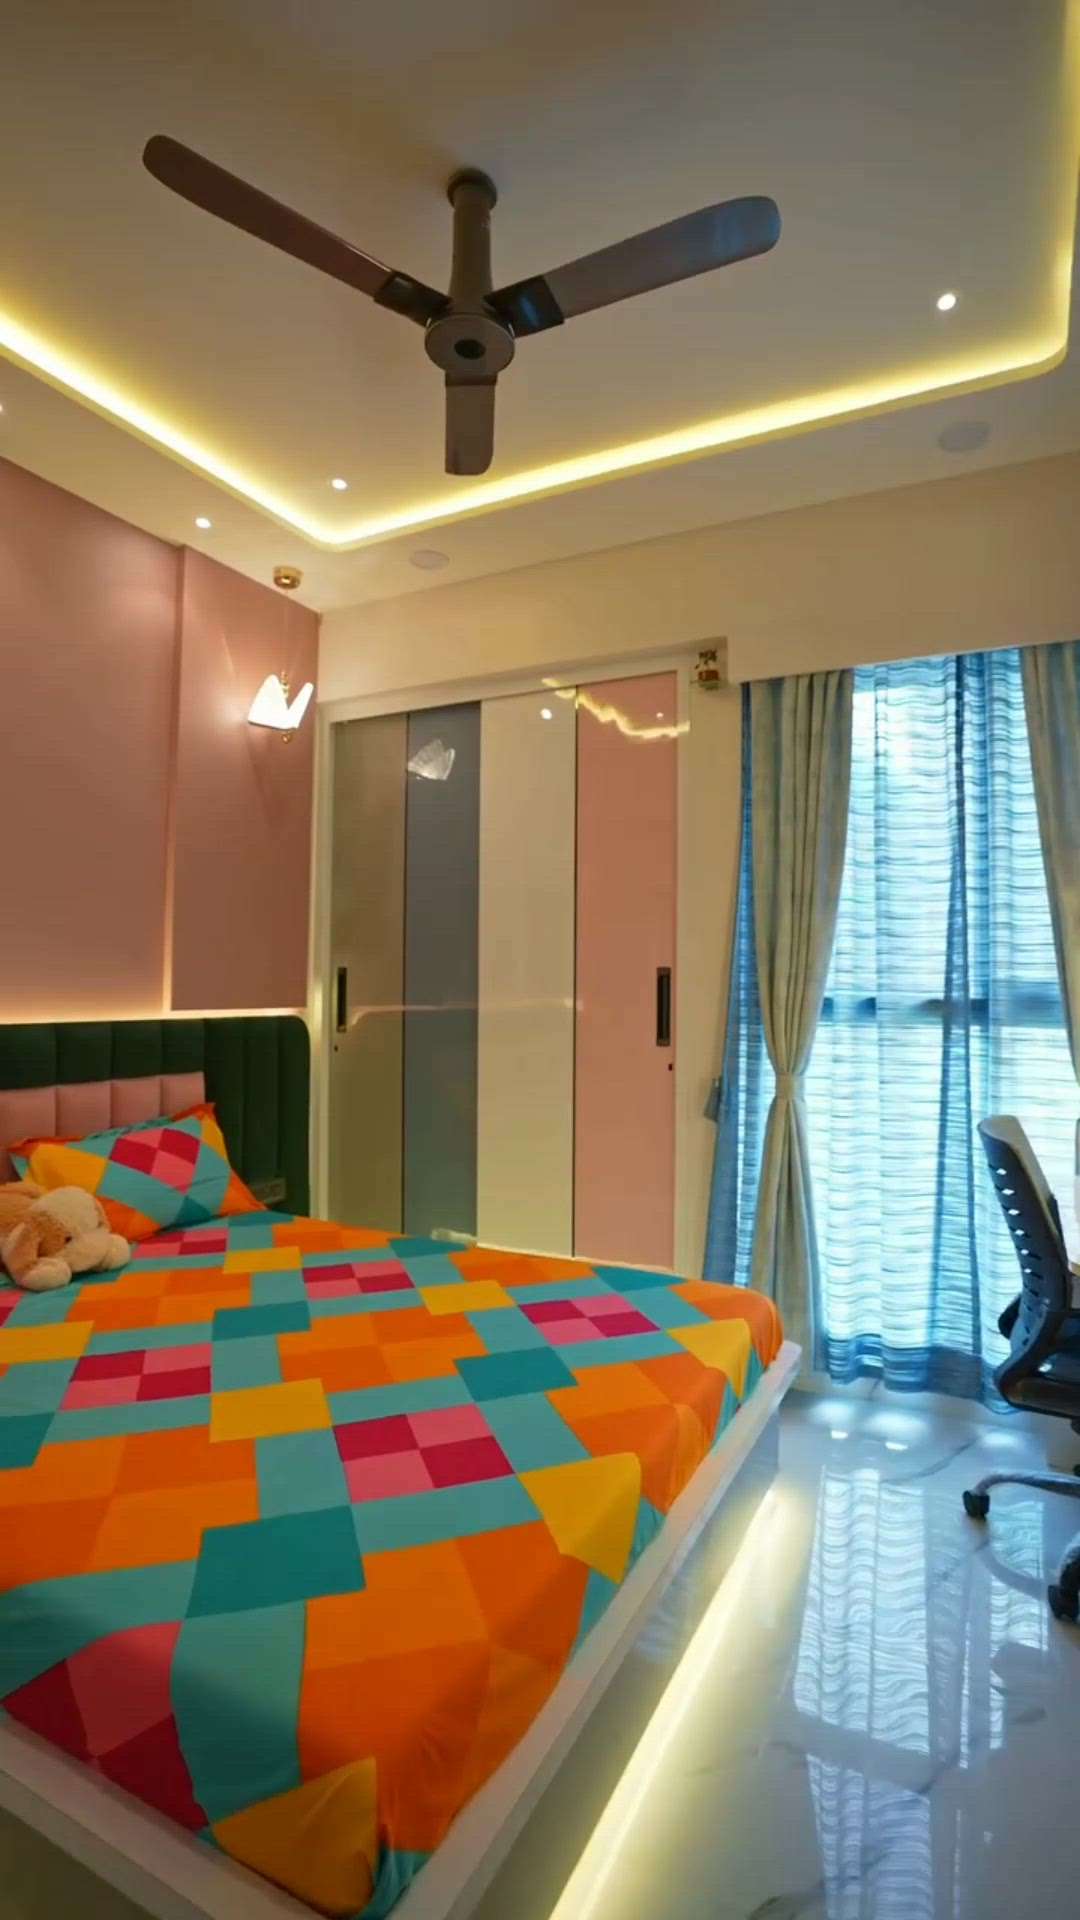 #KidsRoom  #kidsroomdesign  #BedroomDecor  #WardrobeDesigns  #Acrylic  #mica  #wallpanelling  #trendingdesign  #Modularfurniture work karane ke liye contact kare
whats.+919625506863
call.+917060375916 Saqib Mirza